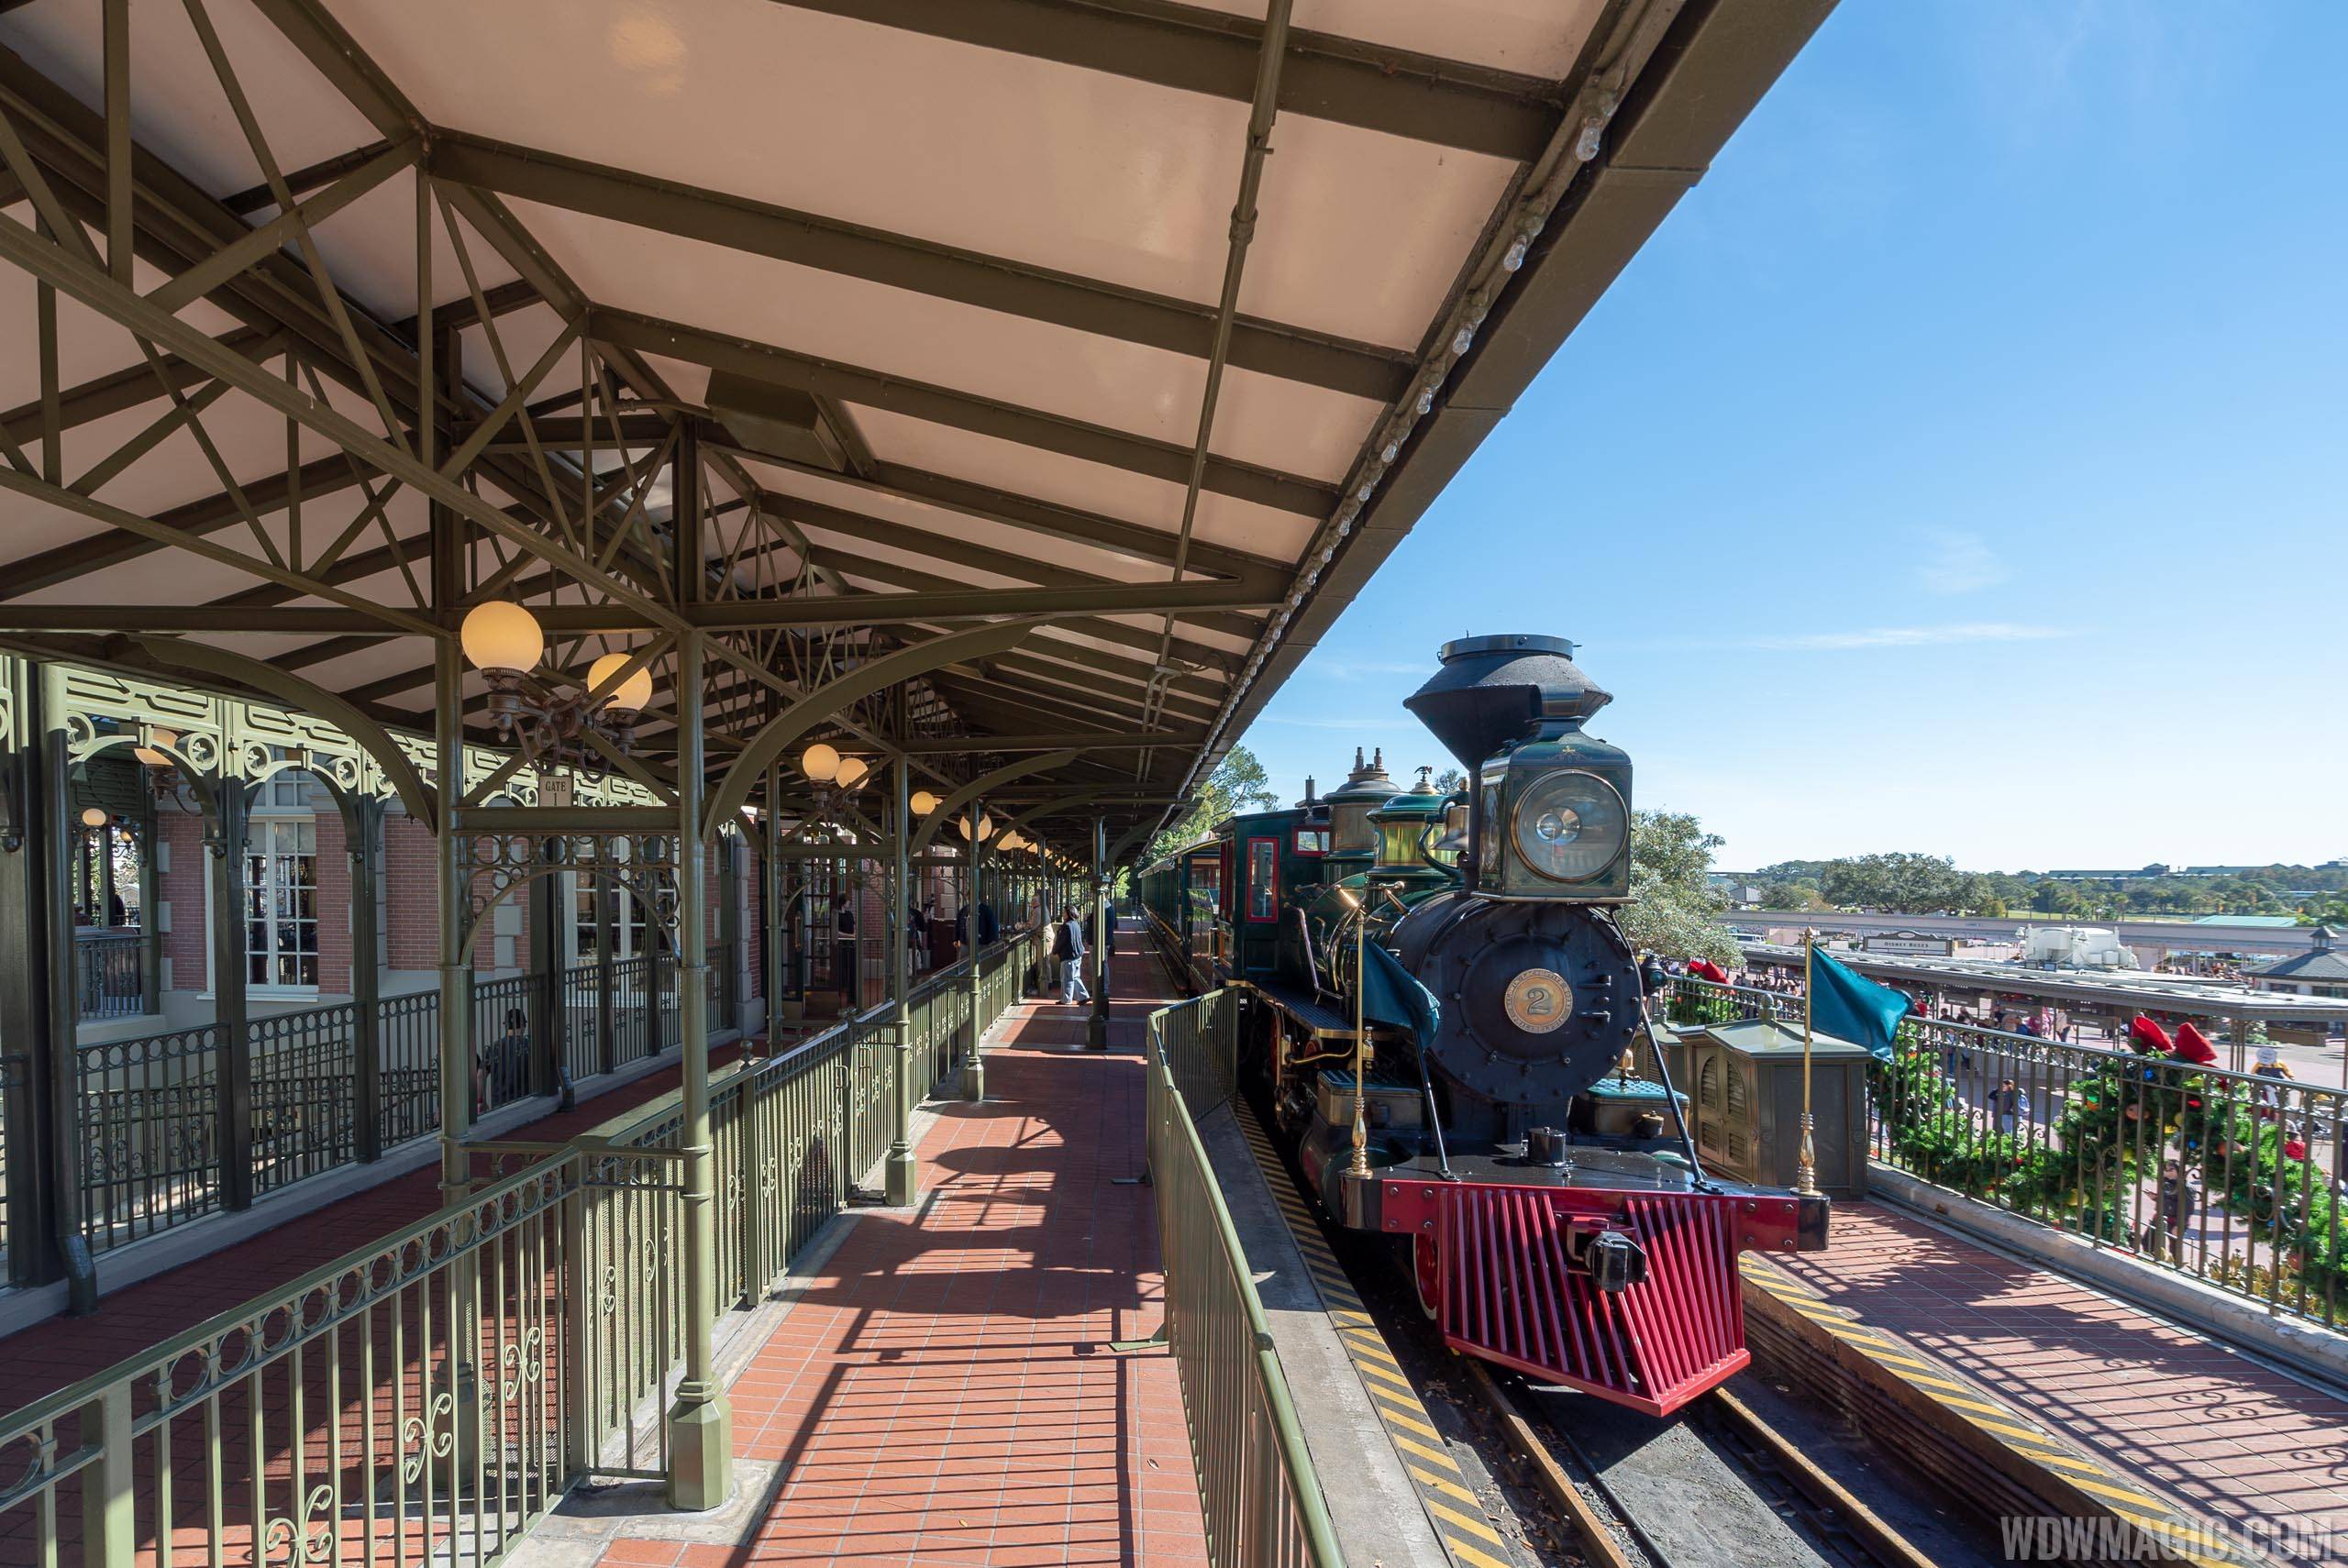 Walt Disney World Railway static exhibit